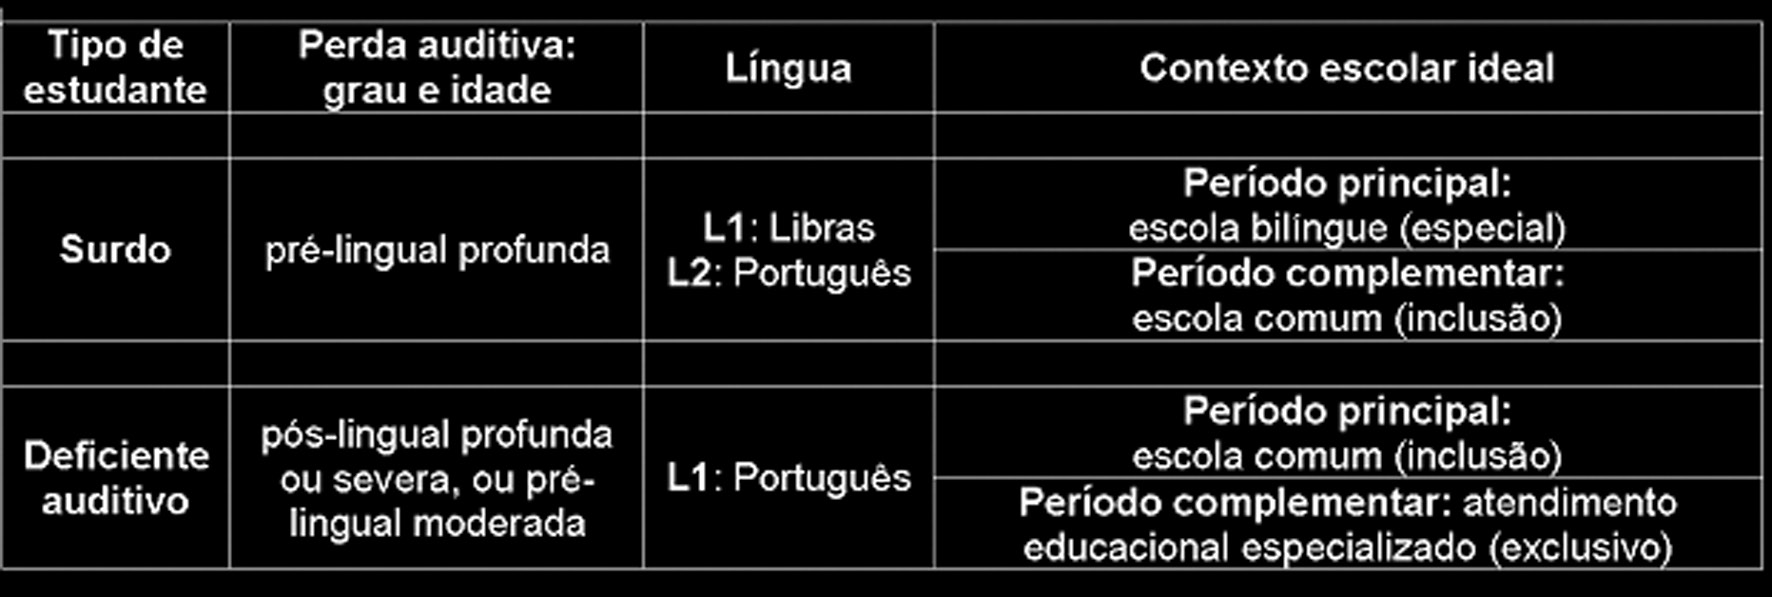 suficiente para permitir à criança adquirir Português), ou 1.